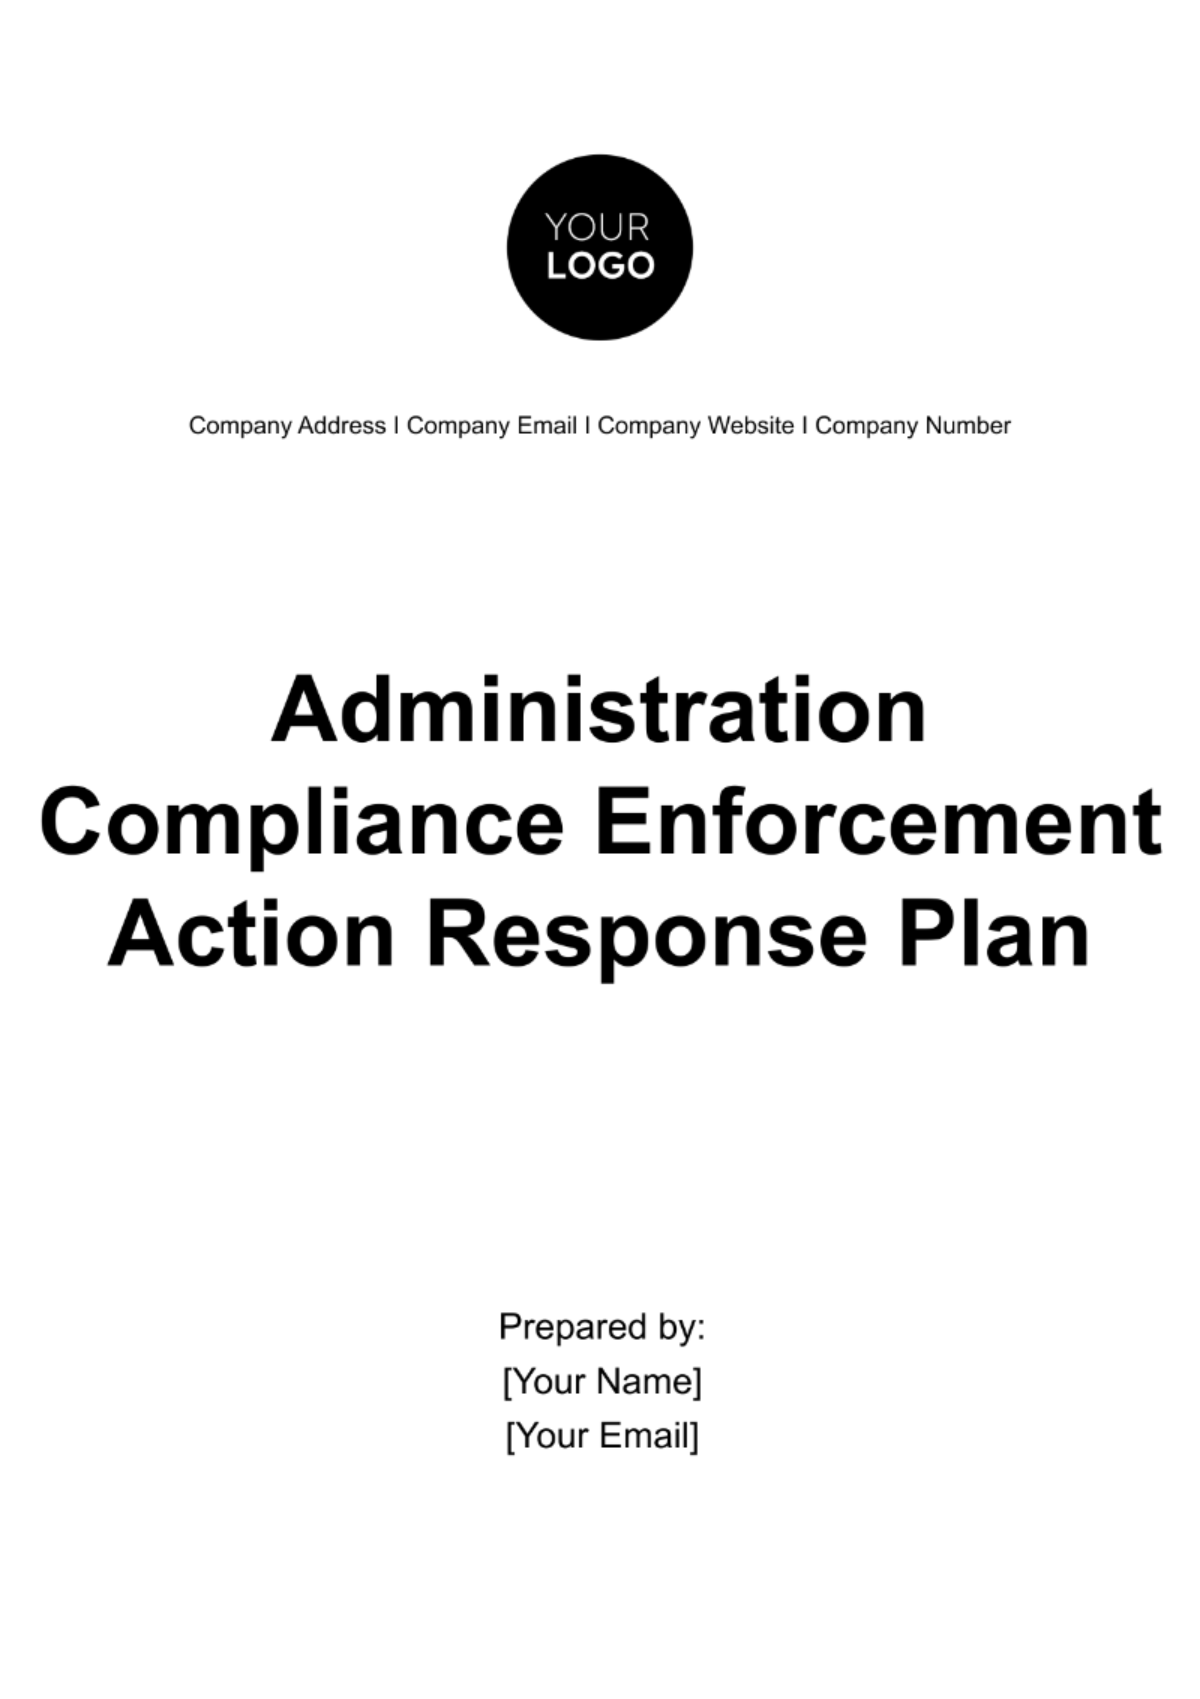 Administration Compliance Enforcement Action Response Plan Template